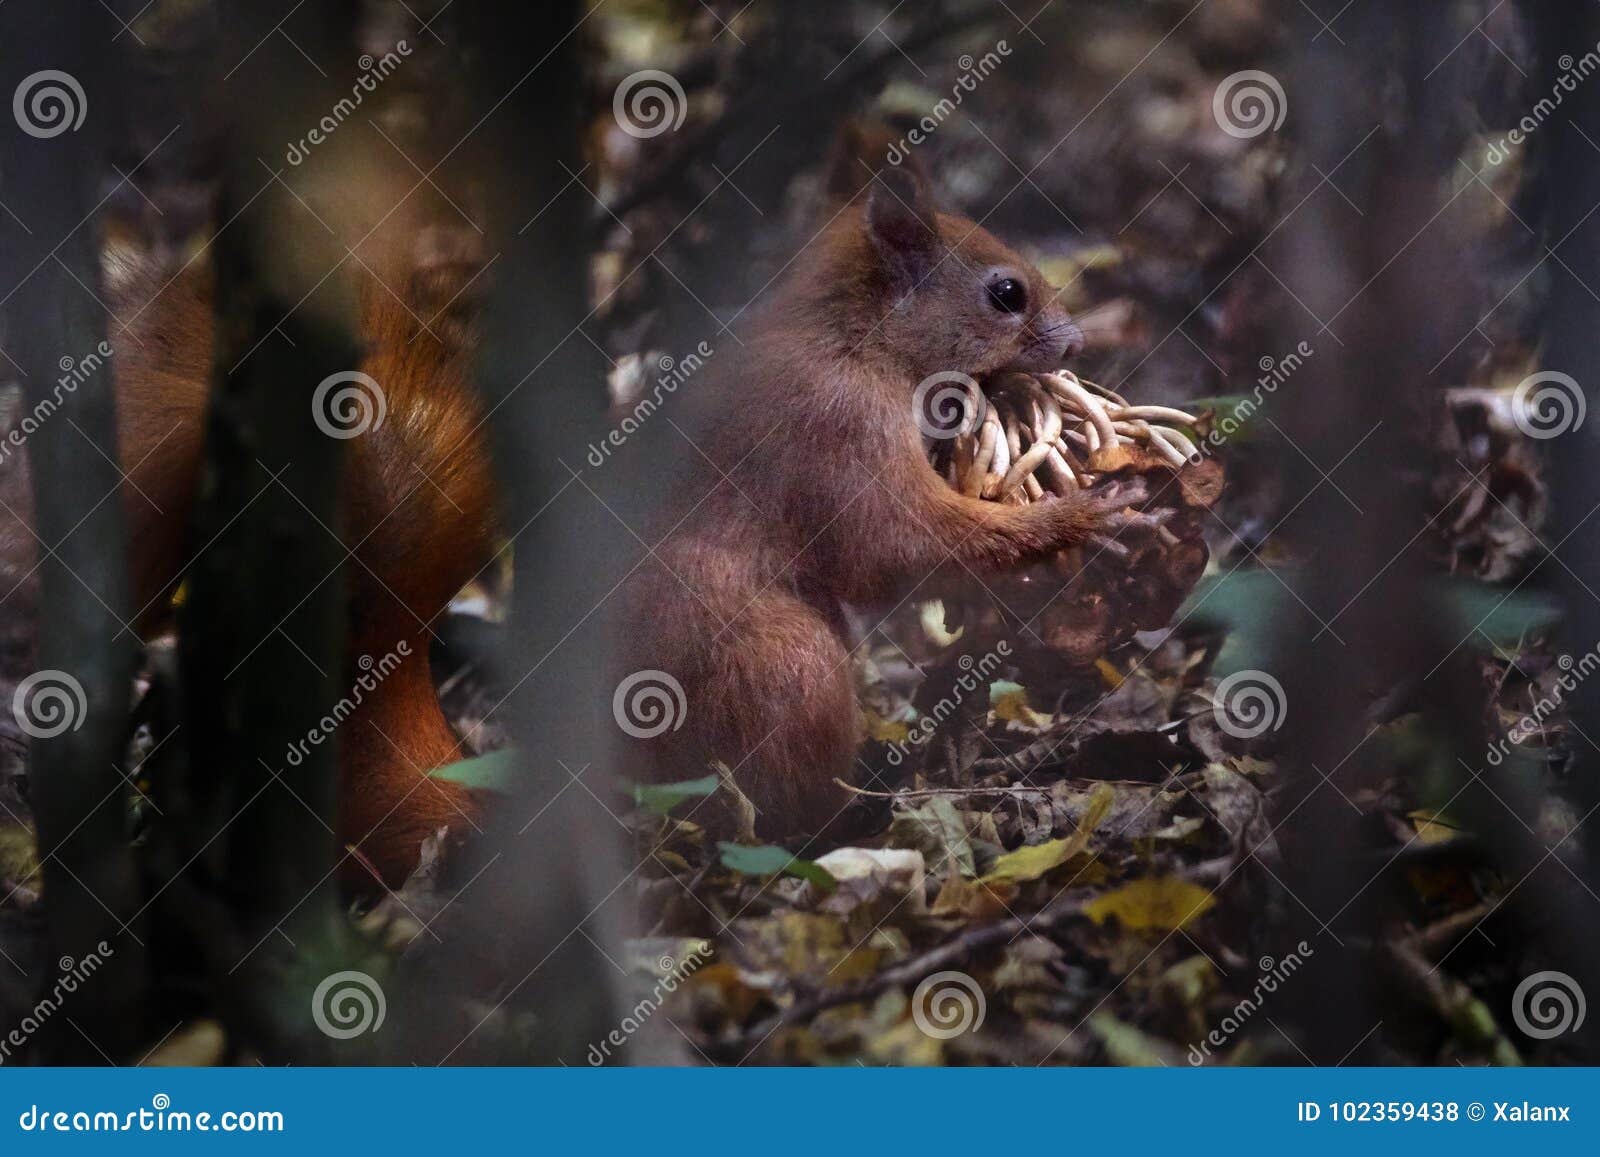 squirrel gathering provisions